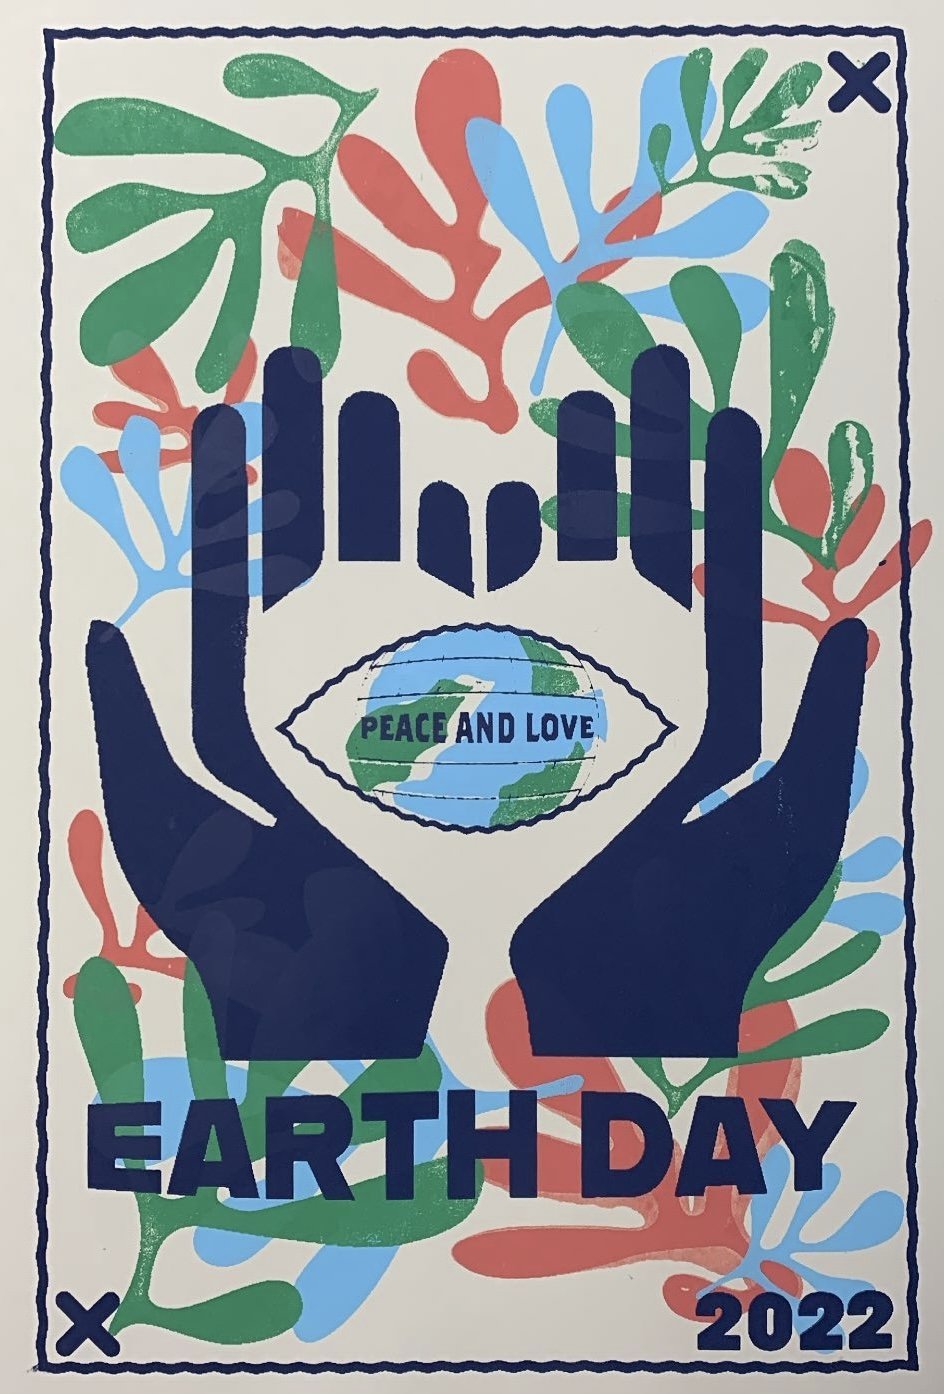 Earth Day 